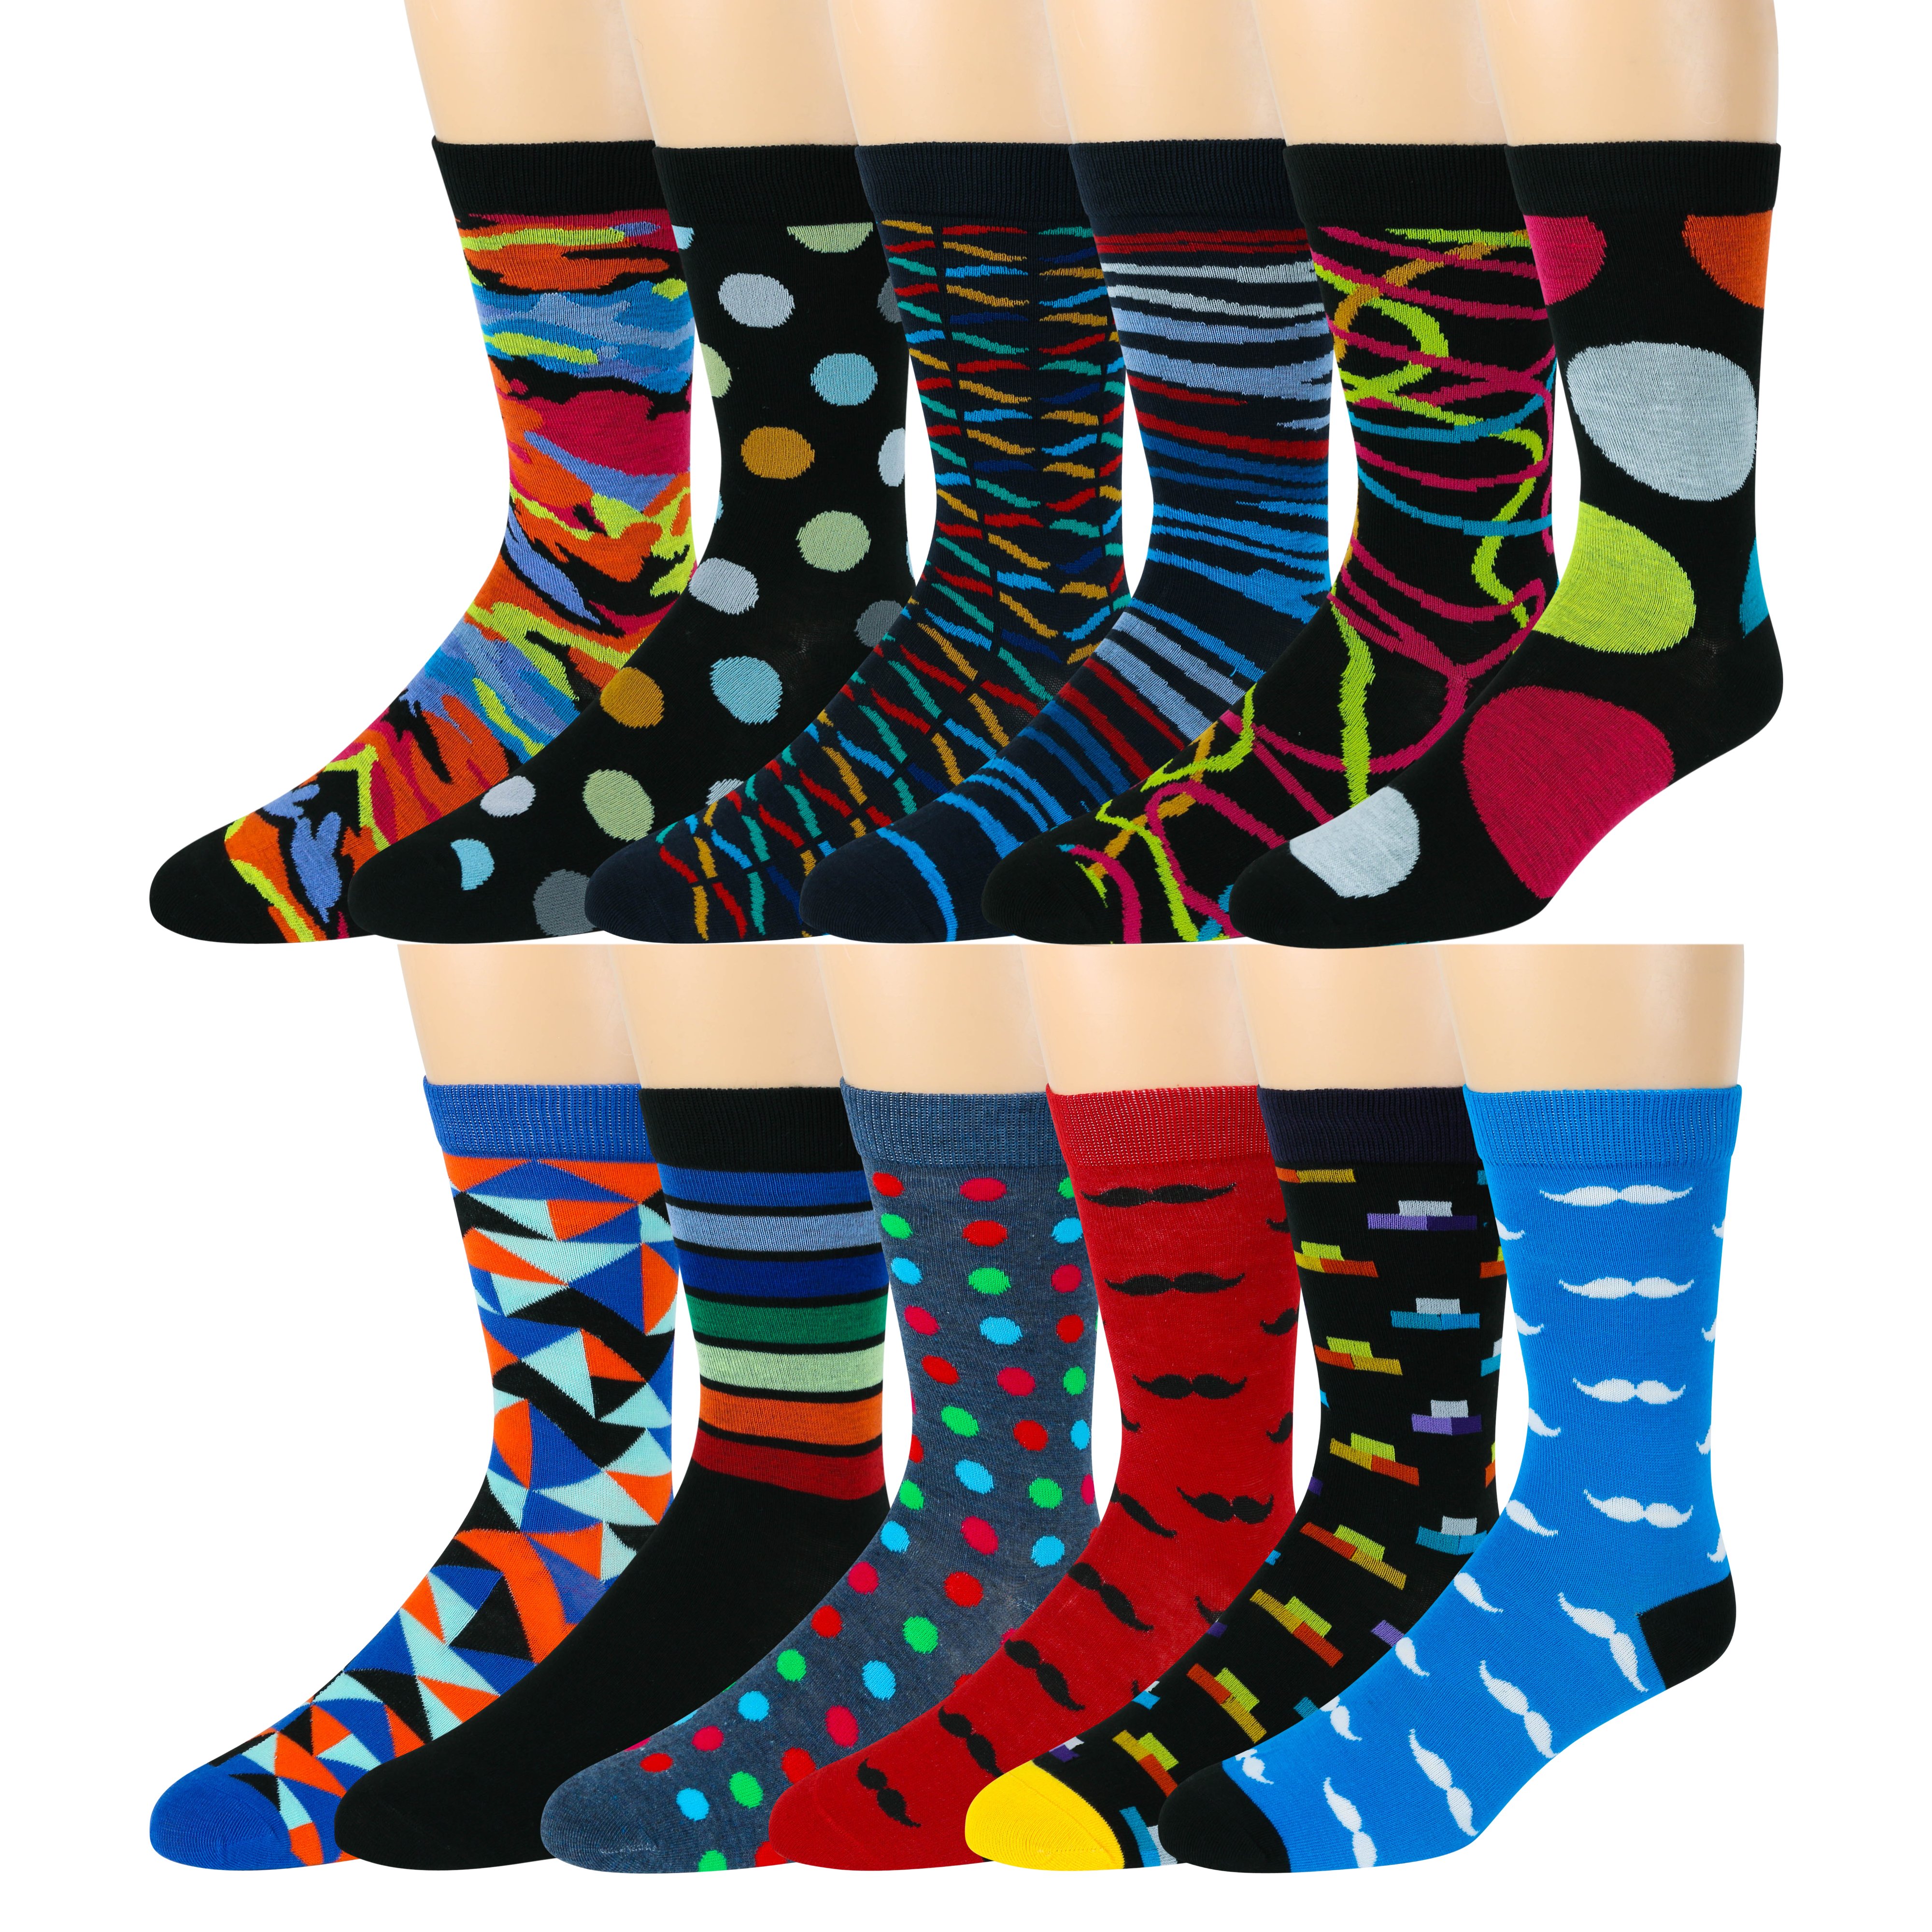 Zeke Men S Dress Socks Funky Fun Colorful Crew Socks 12 Assorted Patterns Ebay